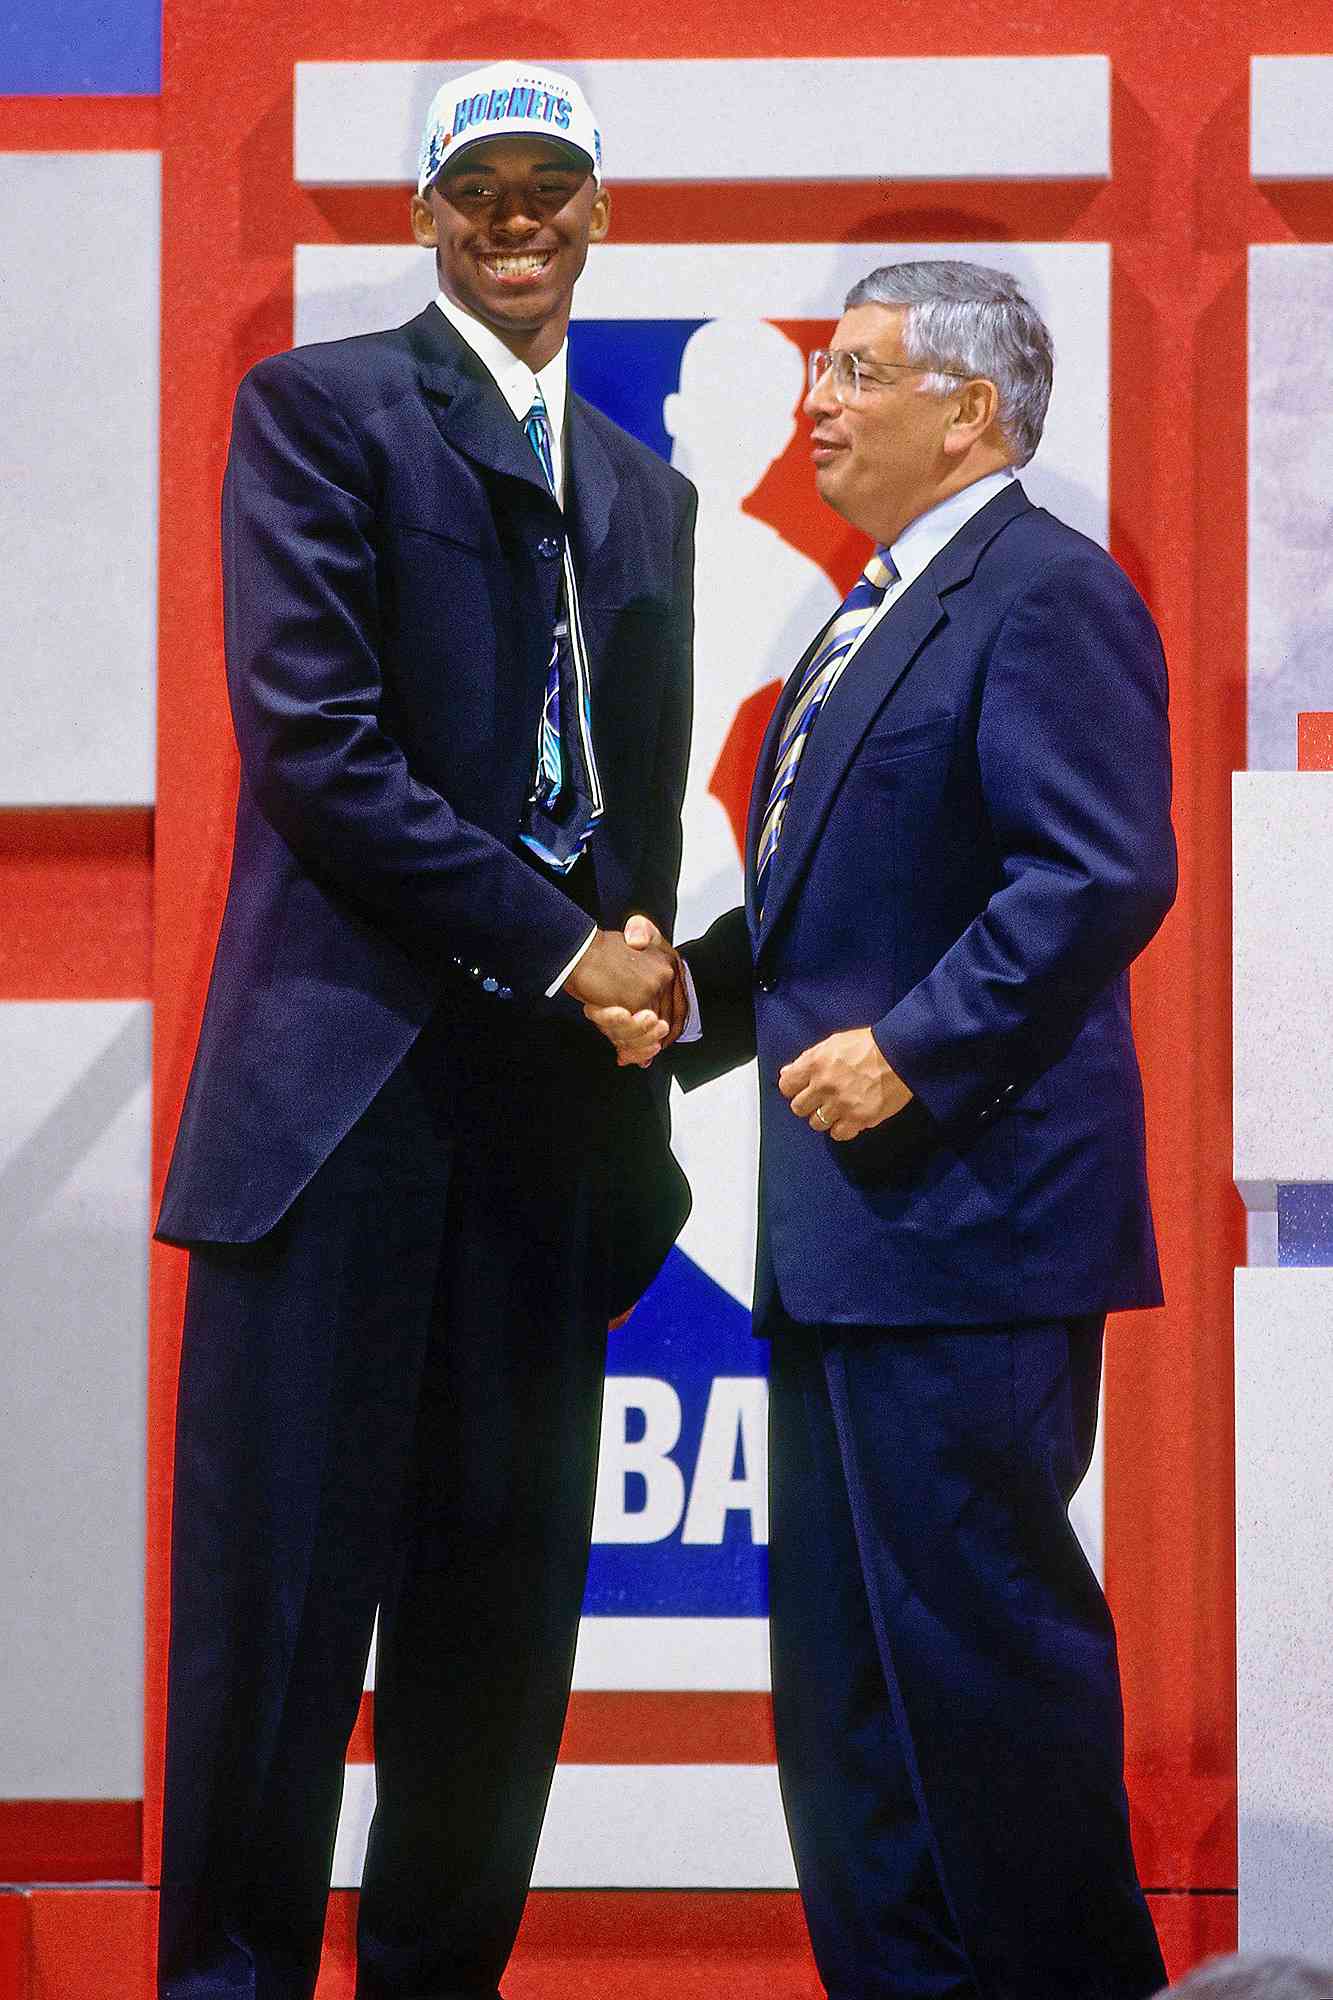 Kobe Bryant poses with NBA Commissioner David Stern